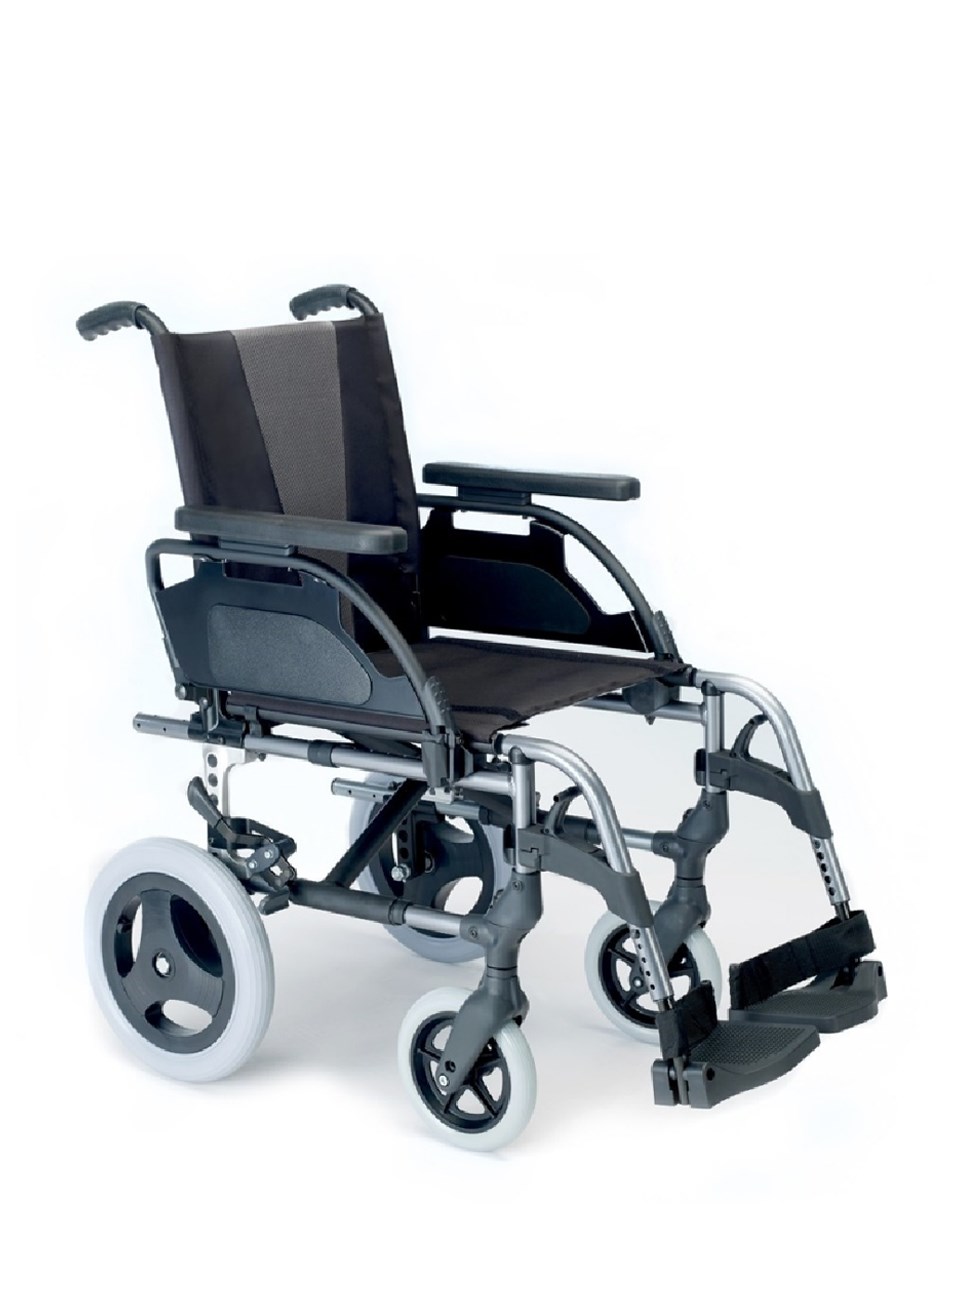 Инвалидные коляски цена бу. Кресло-коляска Breezy 710 Style p. Инвалидная коляска h007. Кресло каталка Армед 2500. Кресло коляска ly 710 производитель.